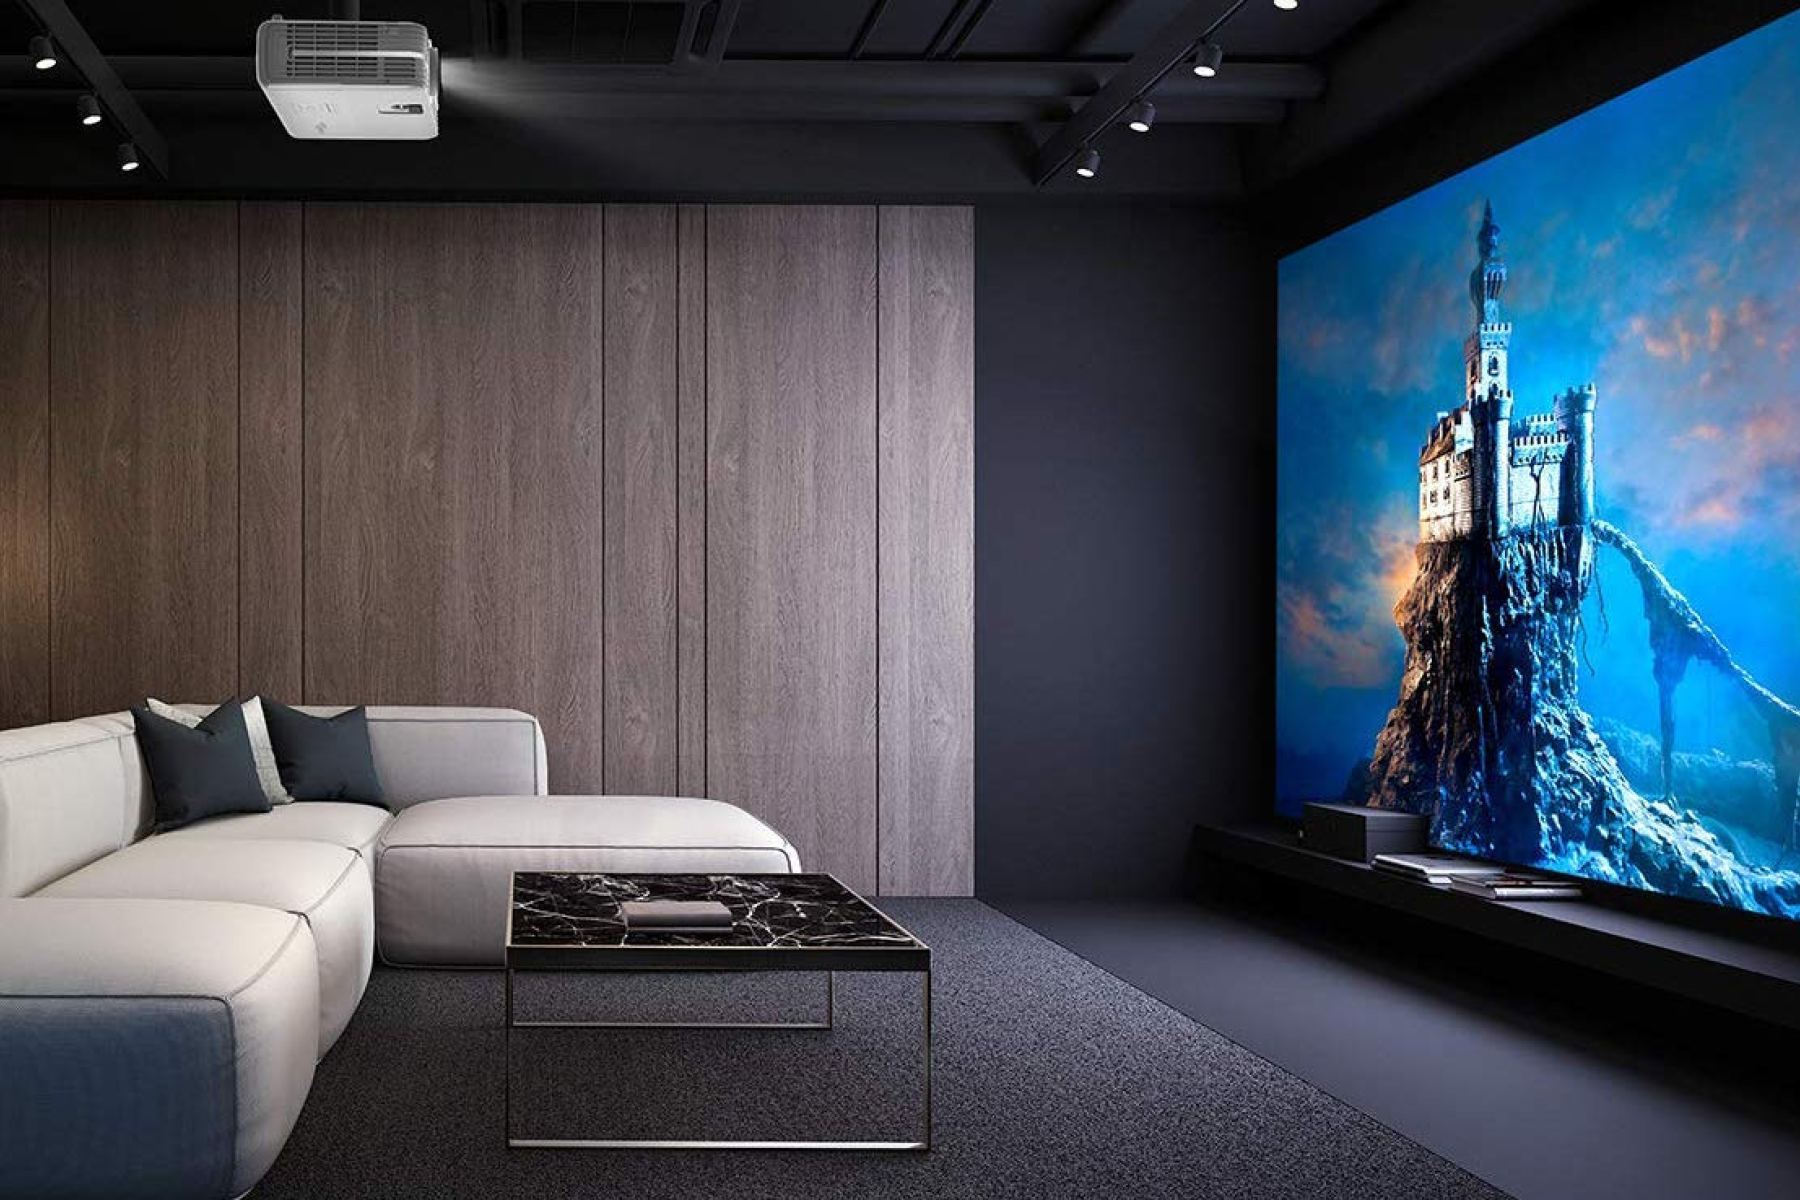 Living Room Projector Instead Of Tv